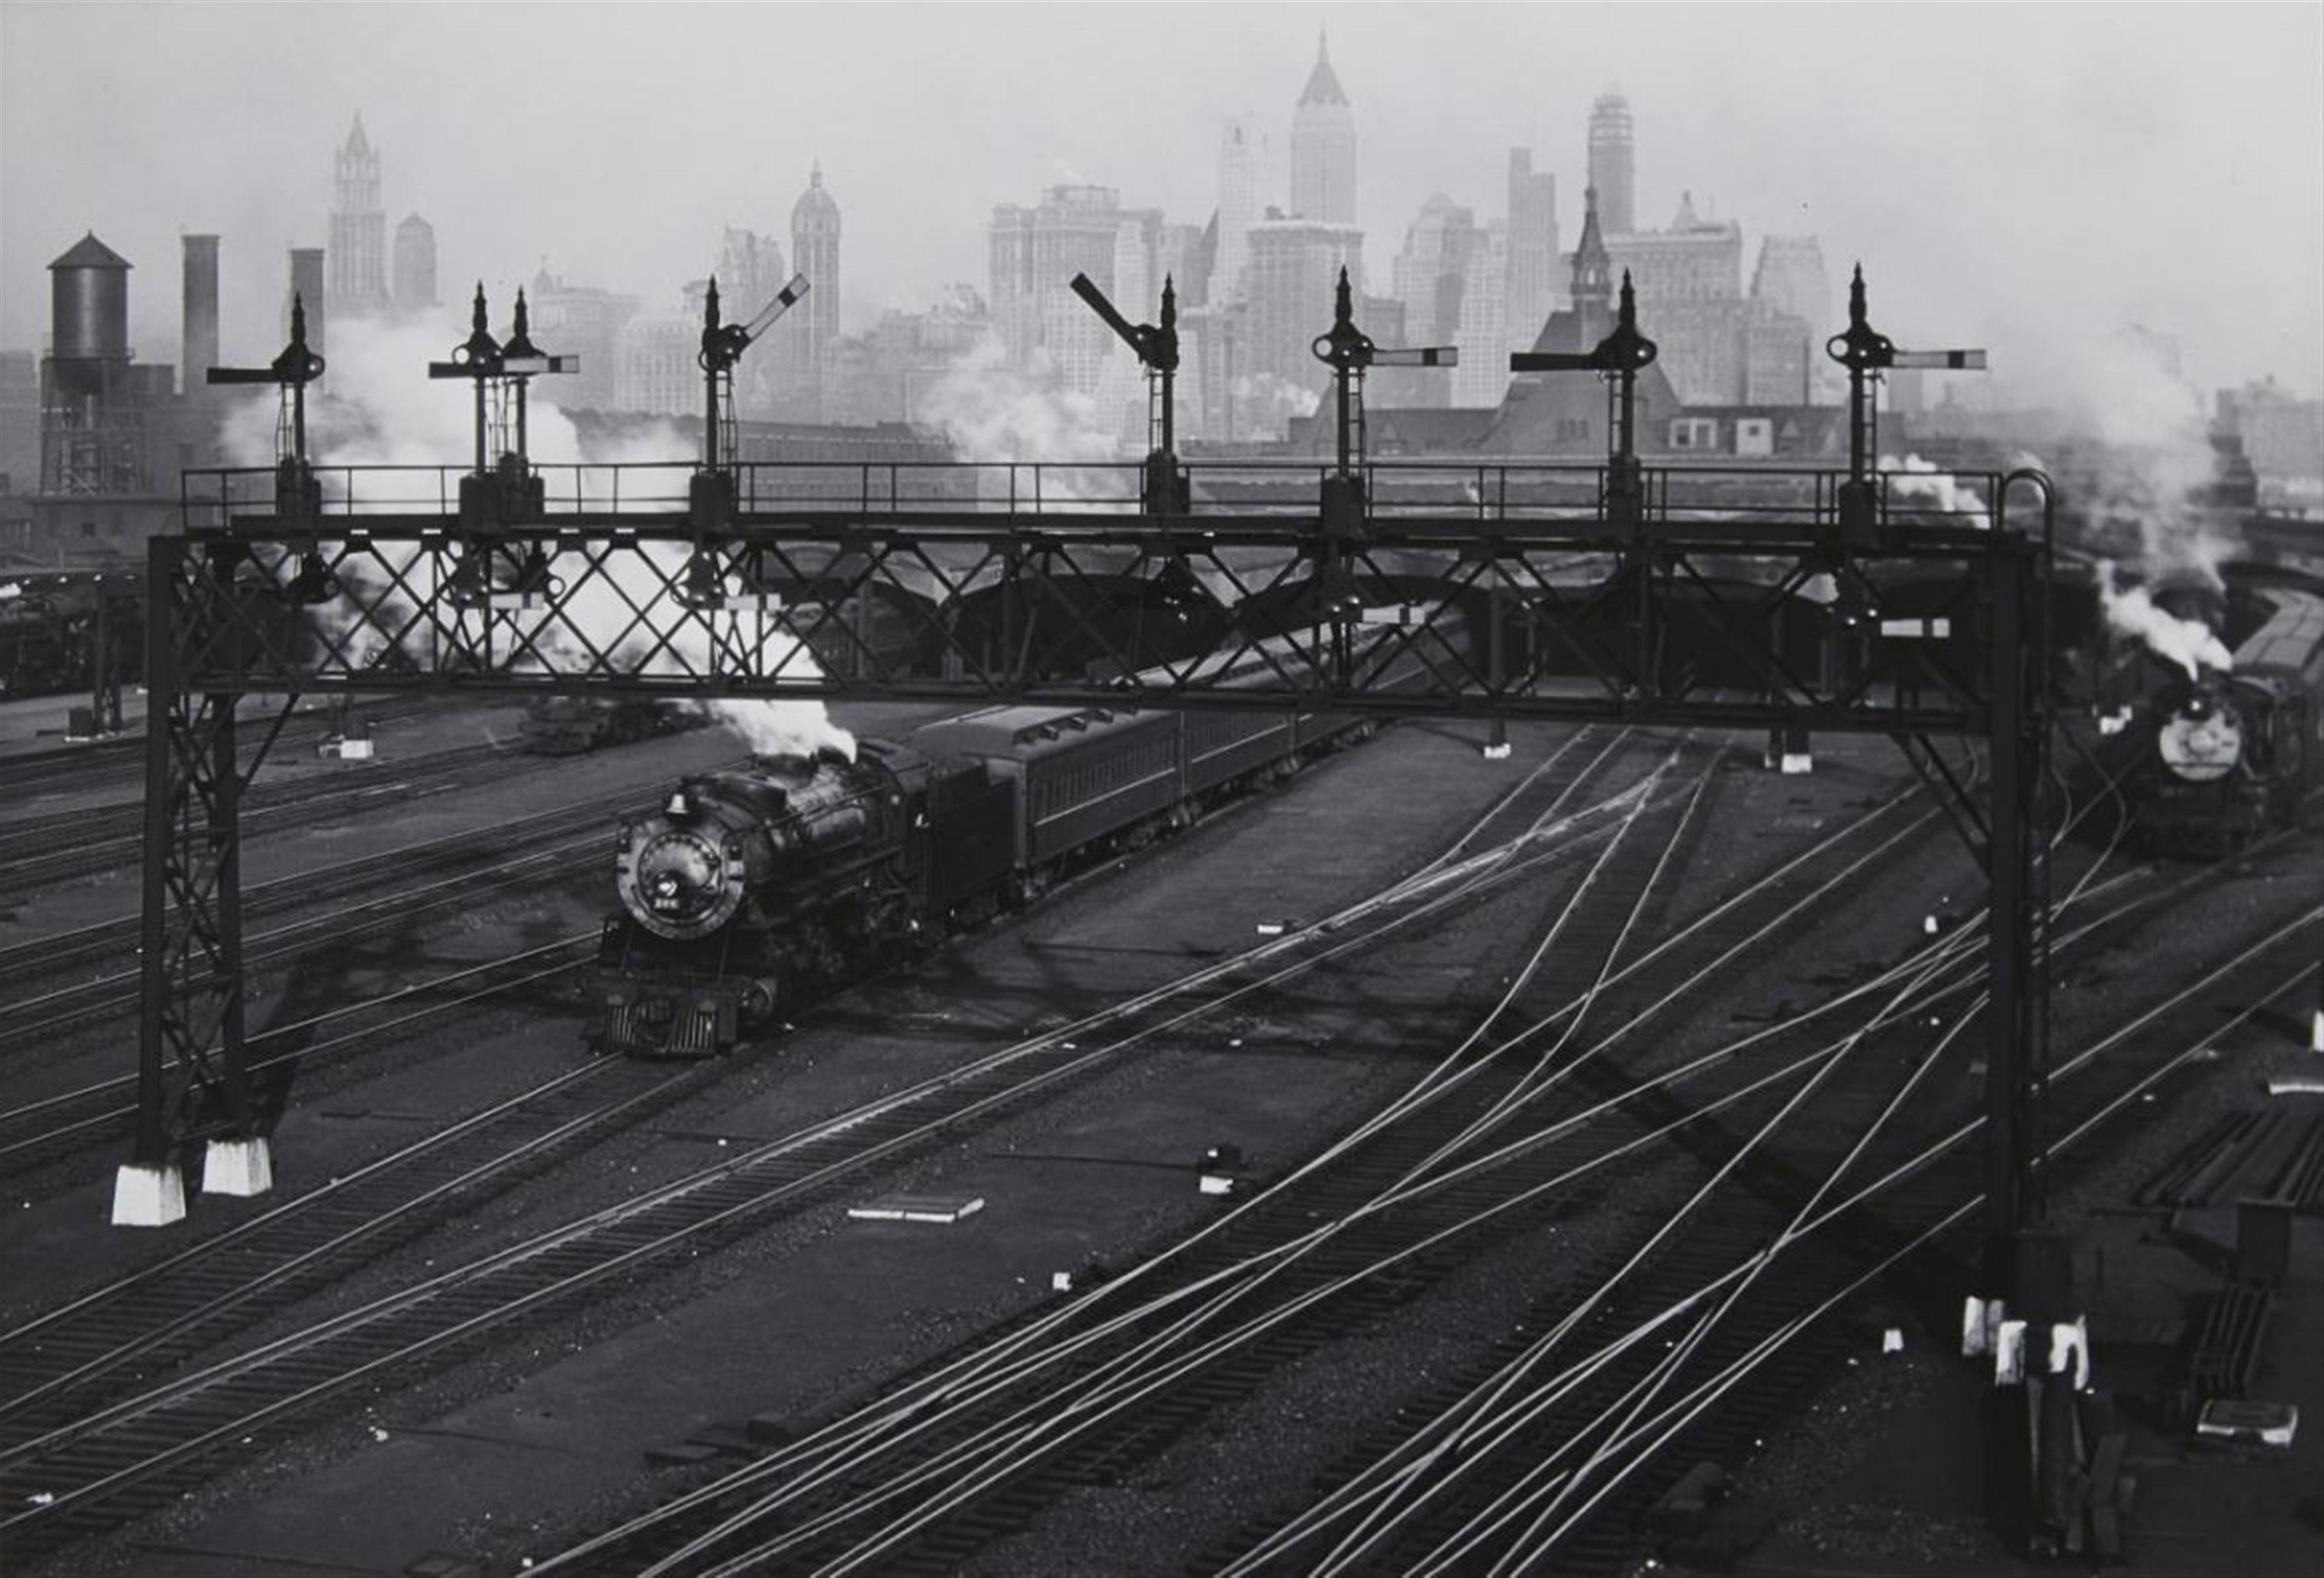 Berenice Abbott - Hoboken Railroad yards looking towards Manhattan, New Jersey - image-1